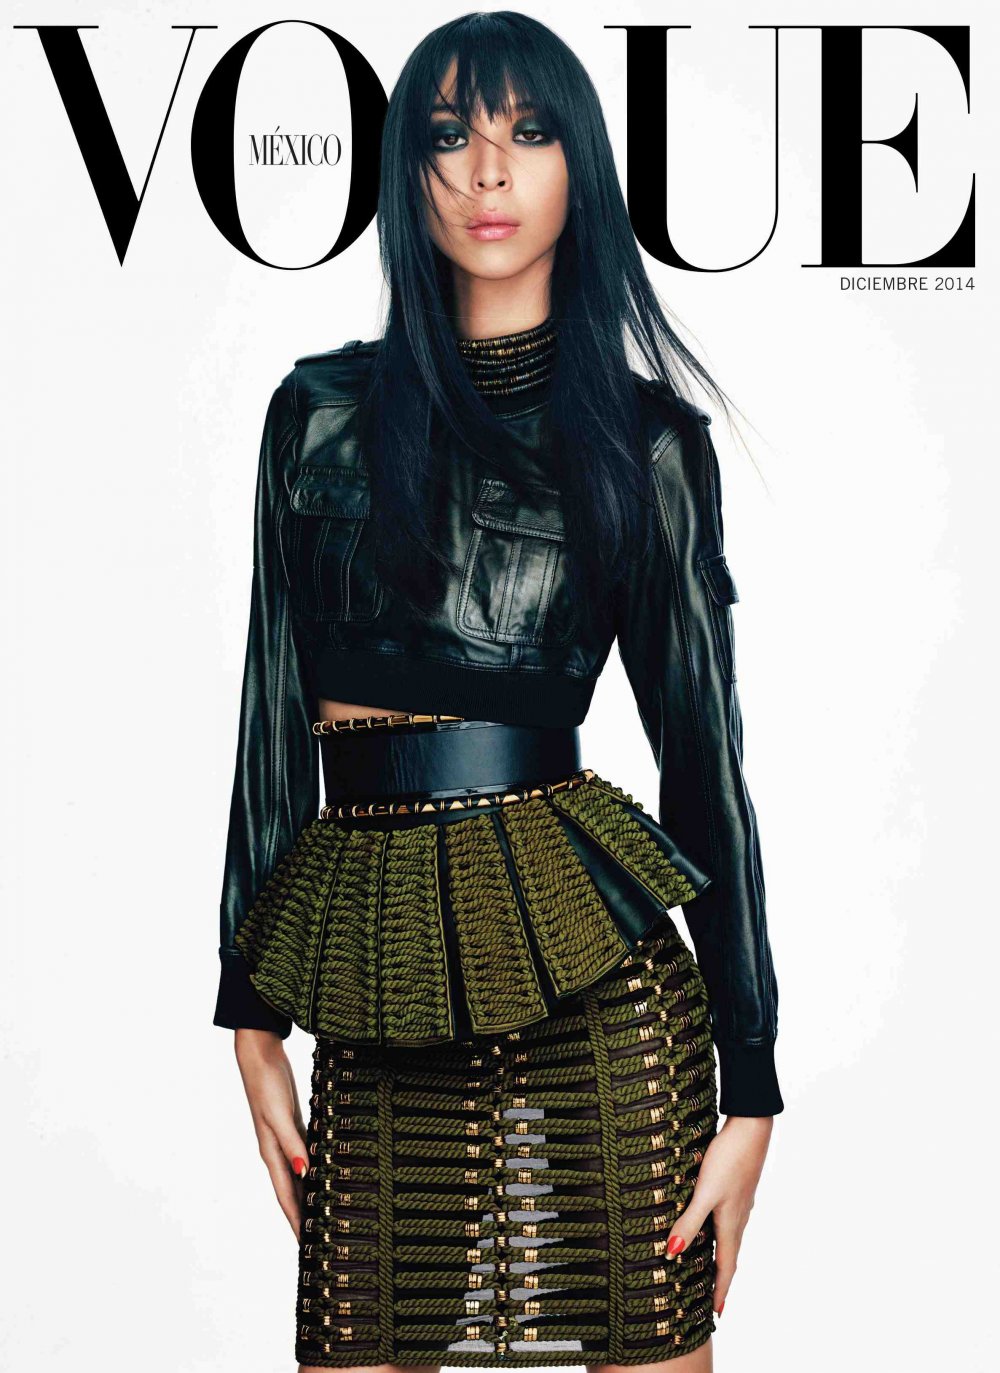 Issa Lish en portada de Vogue México Diciembre 2014